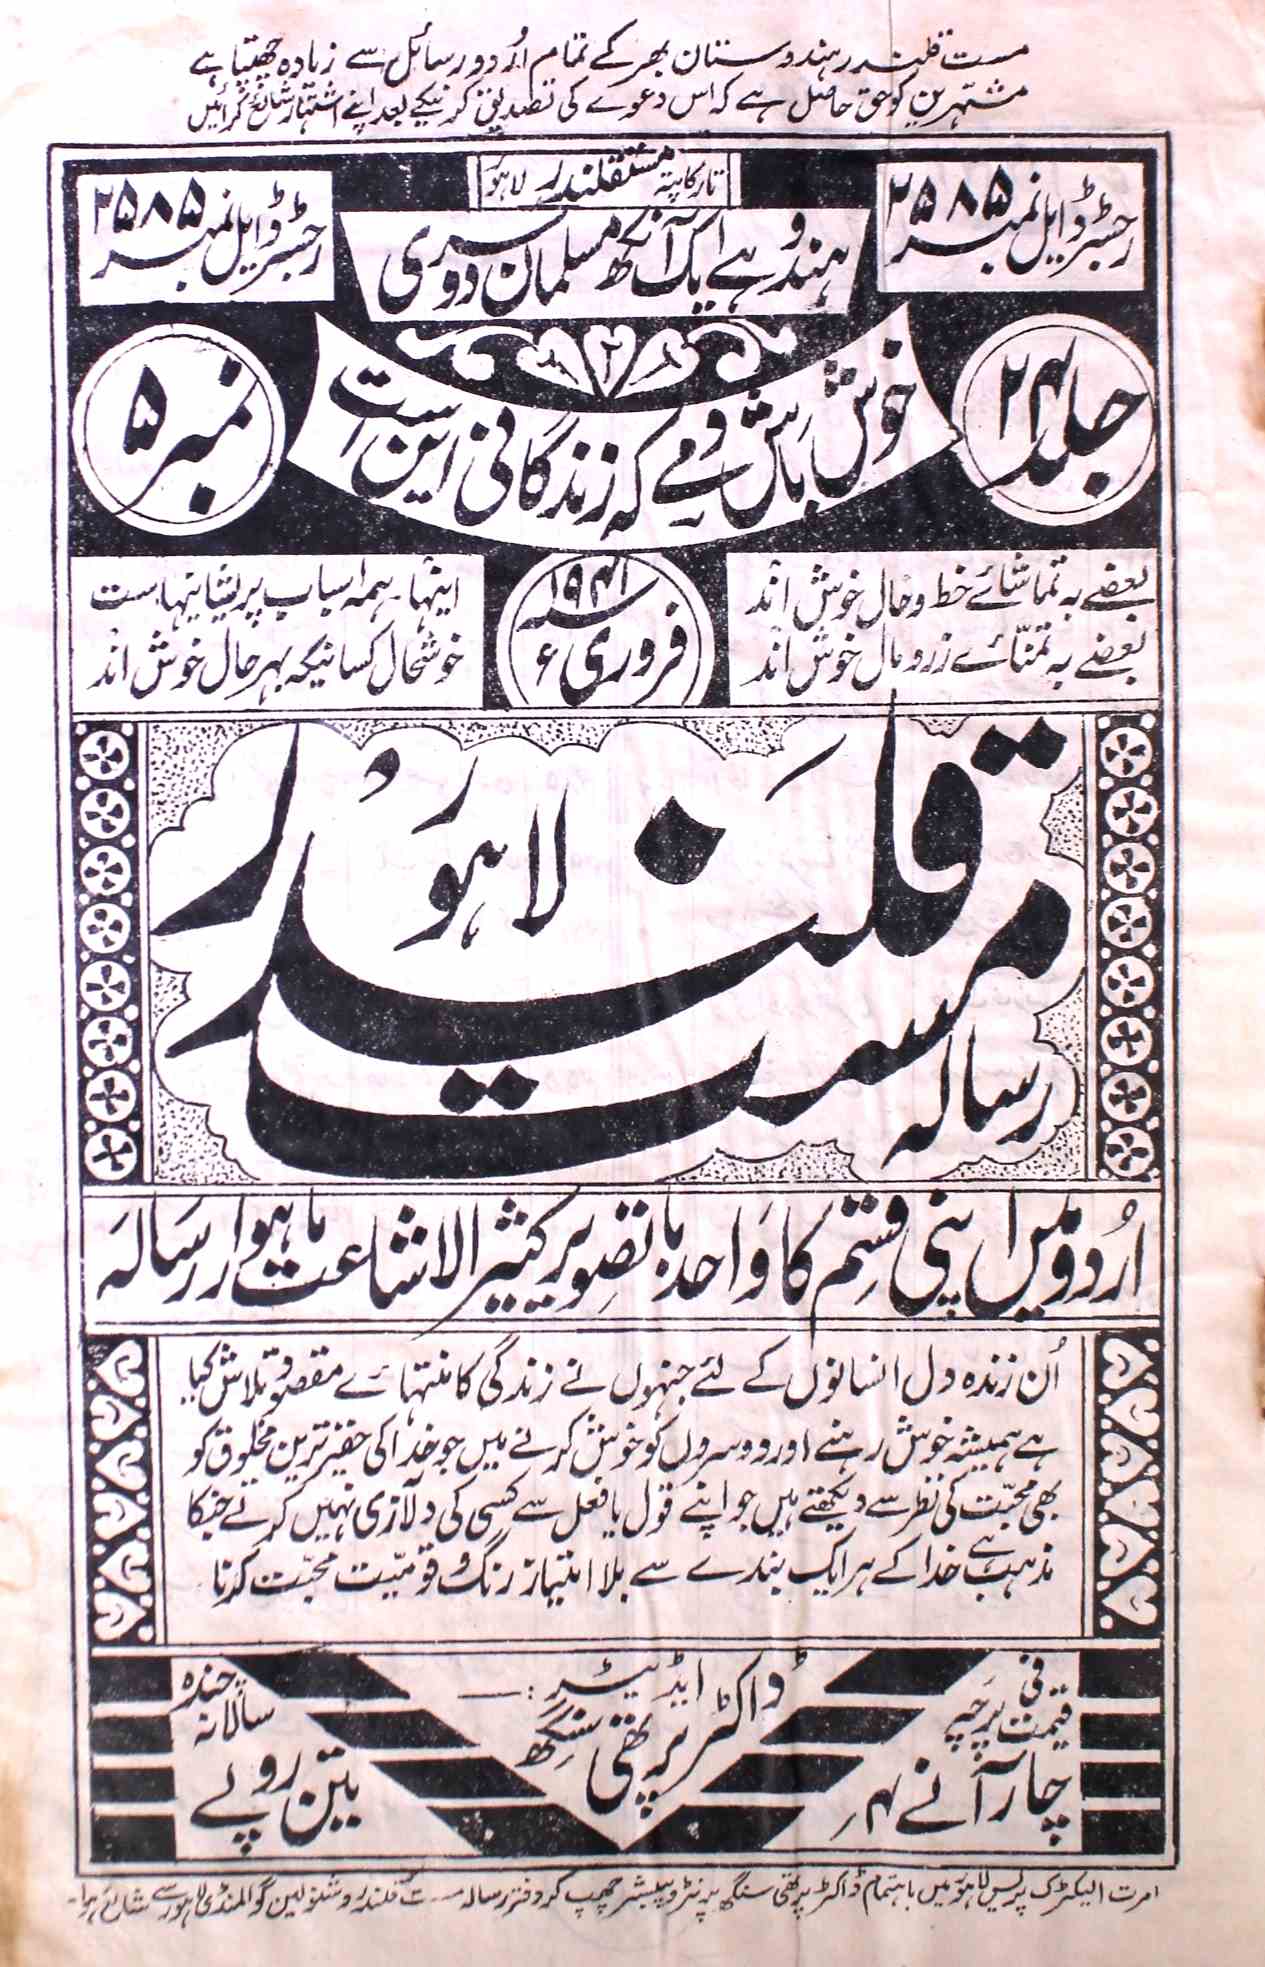 Mast Qalandar  Jild 24 No 5 Febrauary 1941-SVK-Shumara Number-005